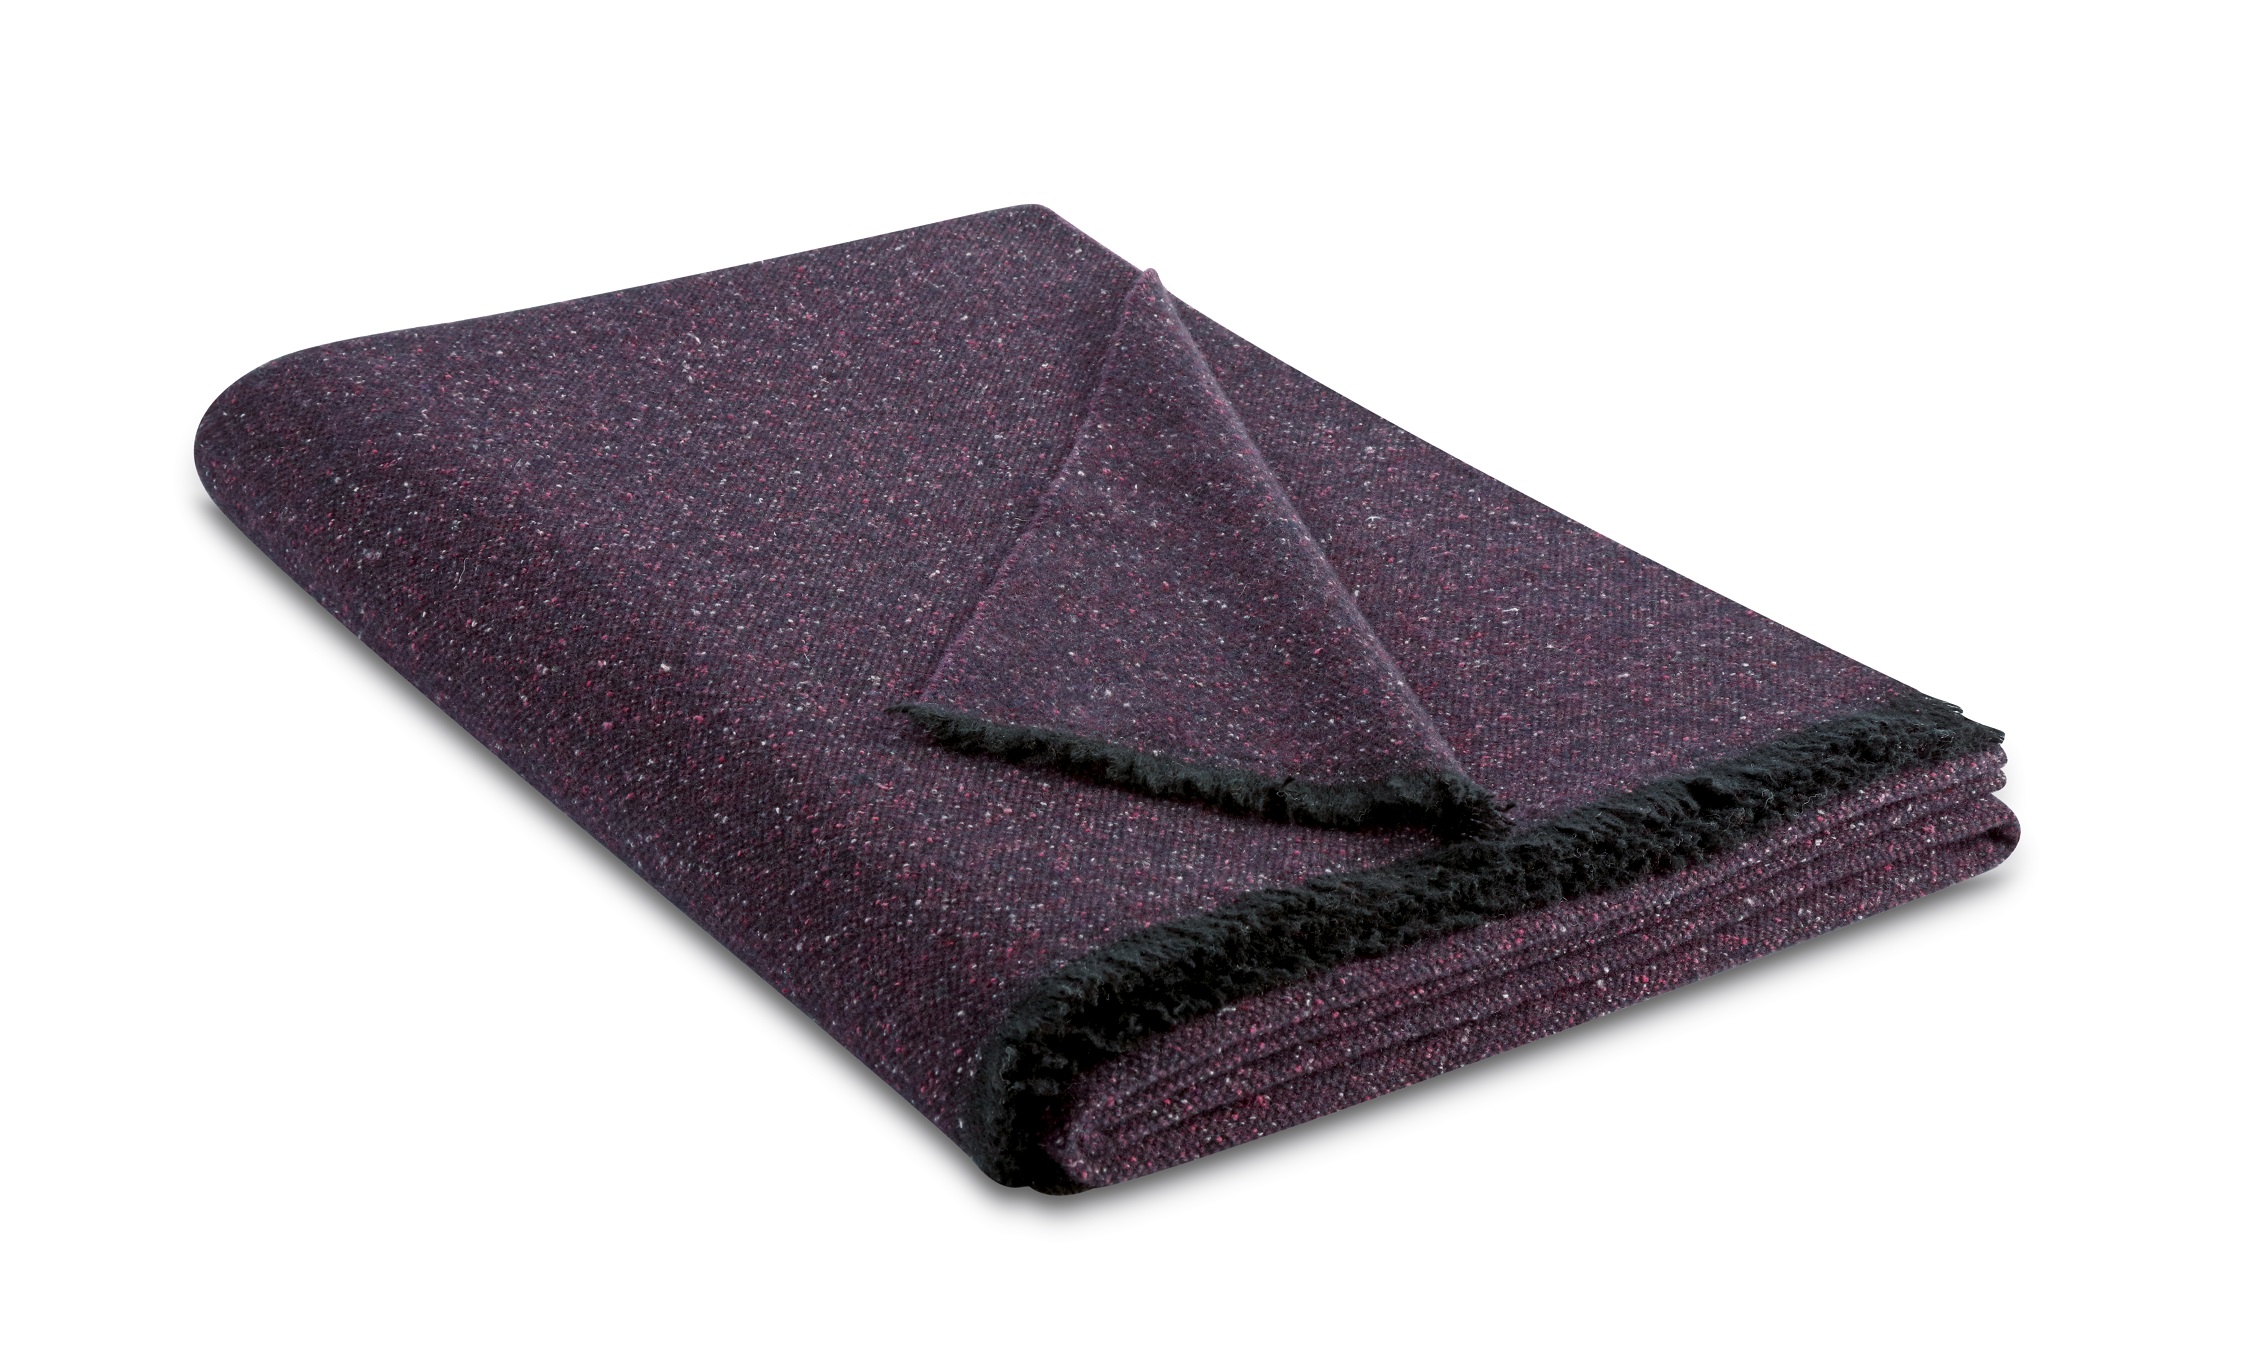 Biederlack Plaid Wolldecke Decke Cashmere Betten purple | Hofmann 130x170 aubergine Wolle Shop Seide